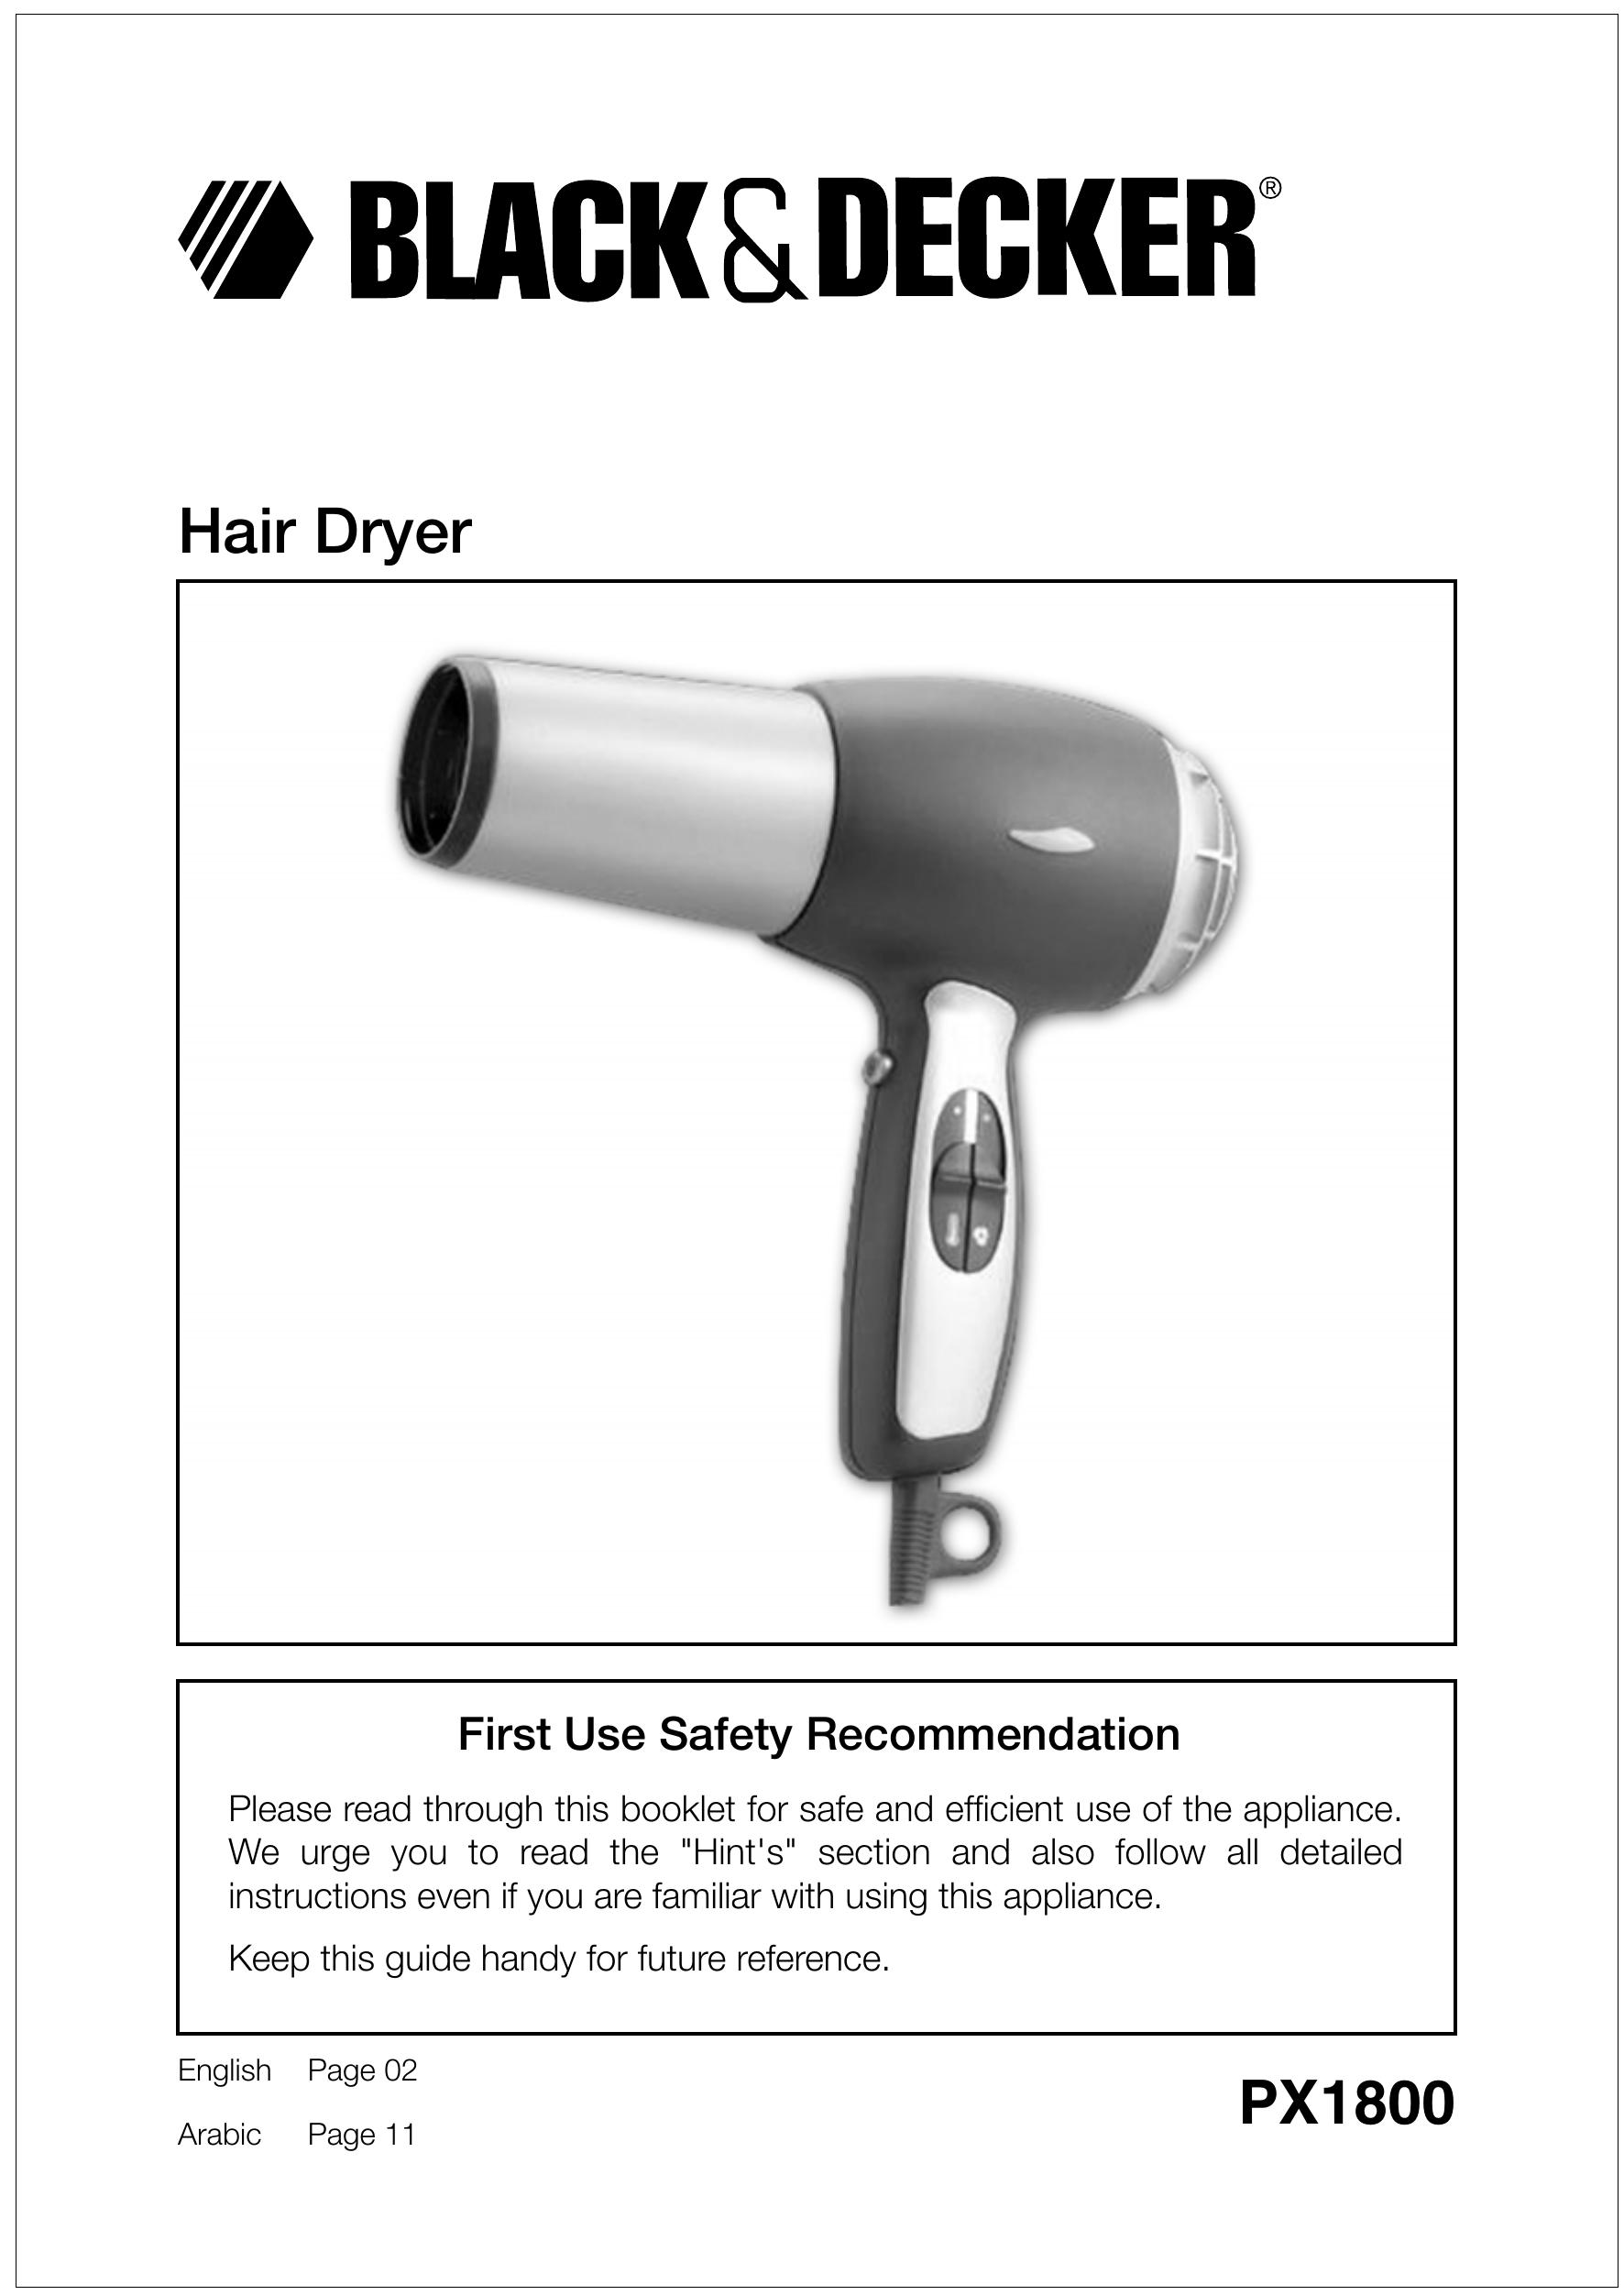 Black & Decker PX1800 Hair Dryer User Manual